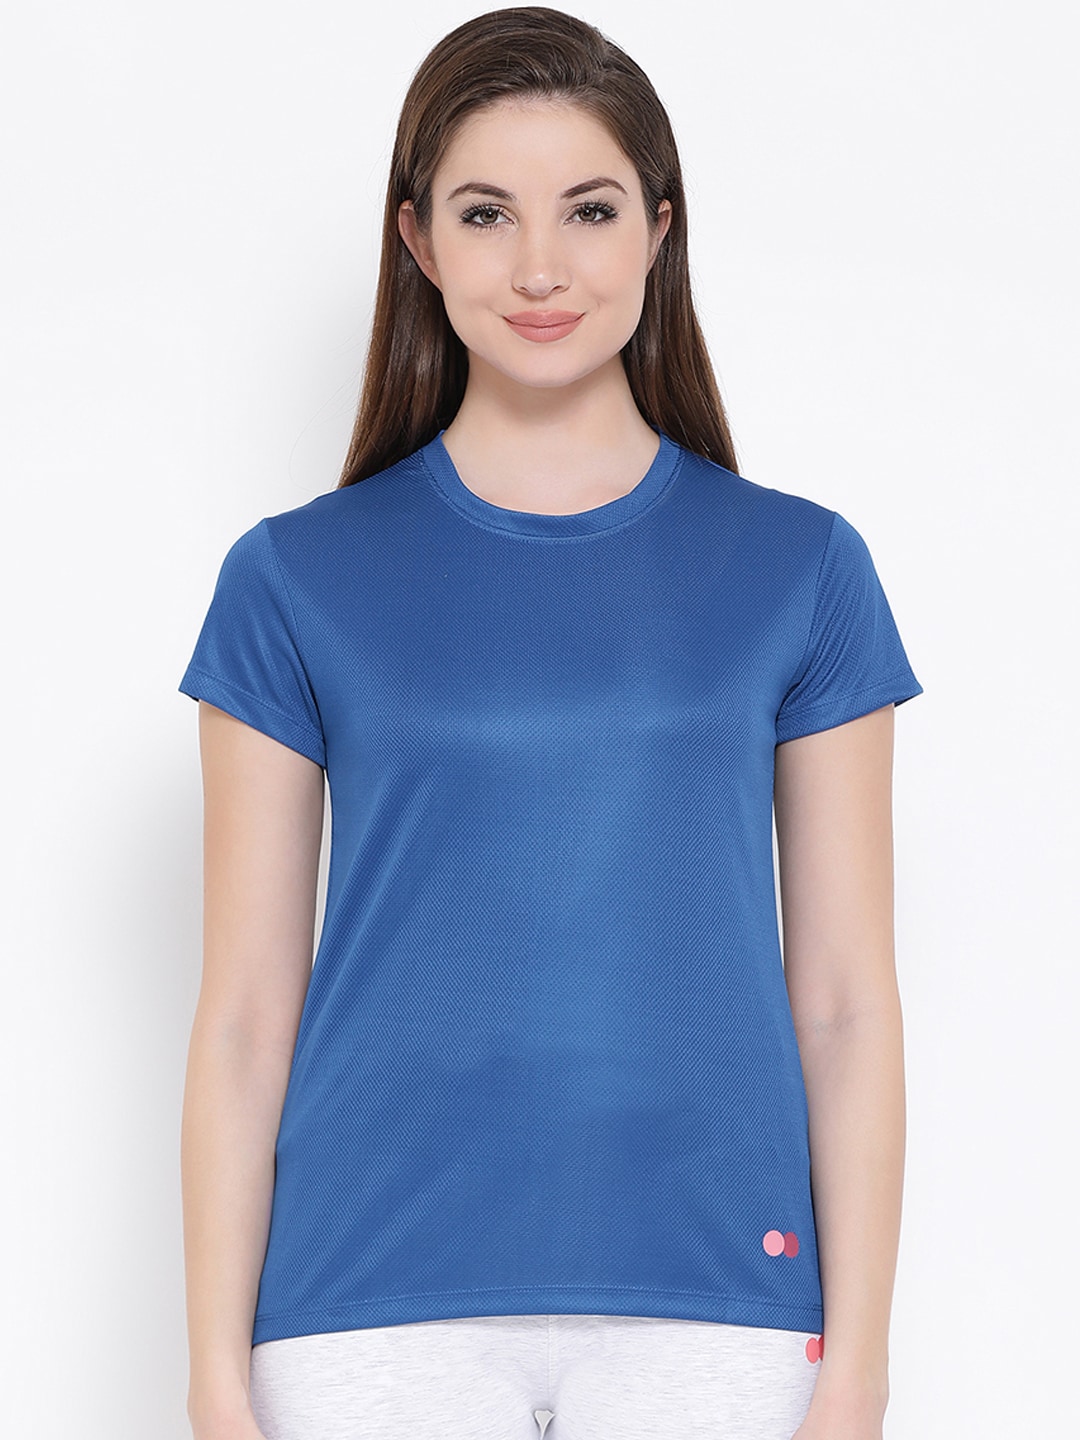 Clovia Women Blue Solid Slim Fit Active-Wear Round Neck T-shirt Price in India